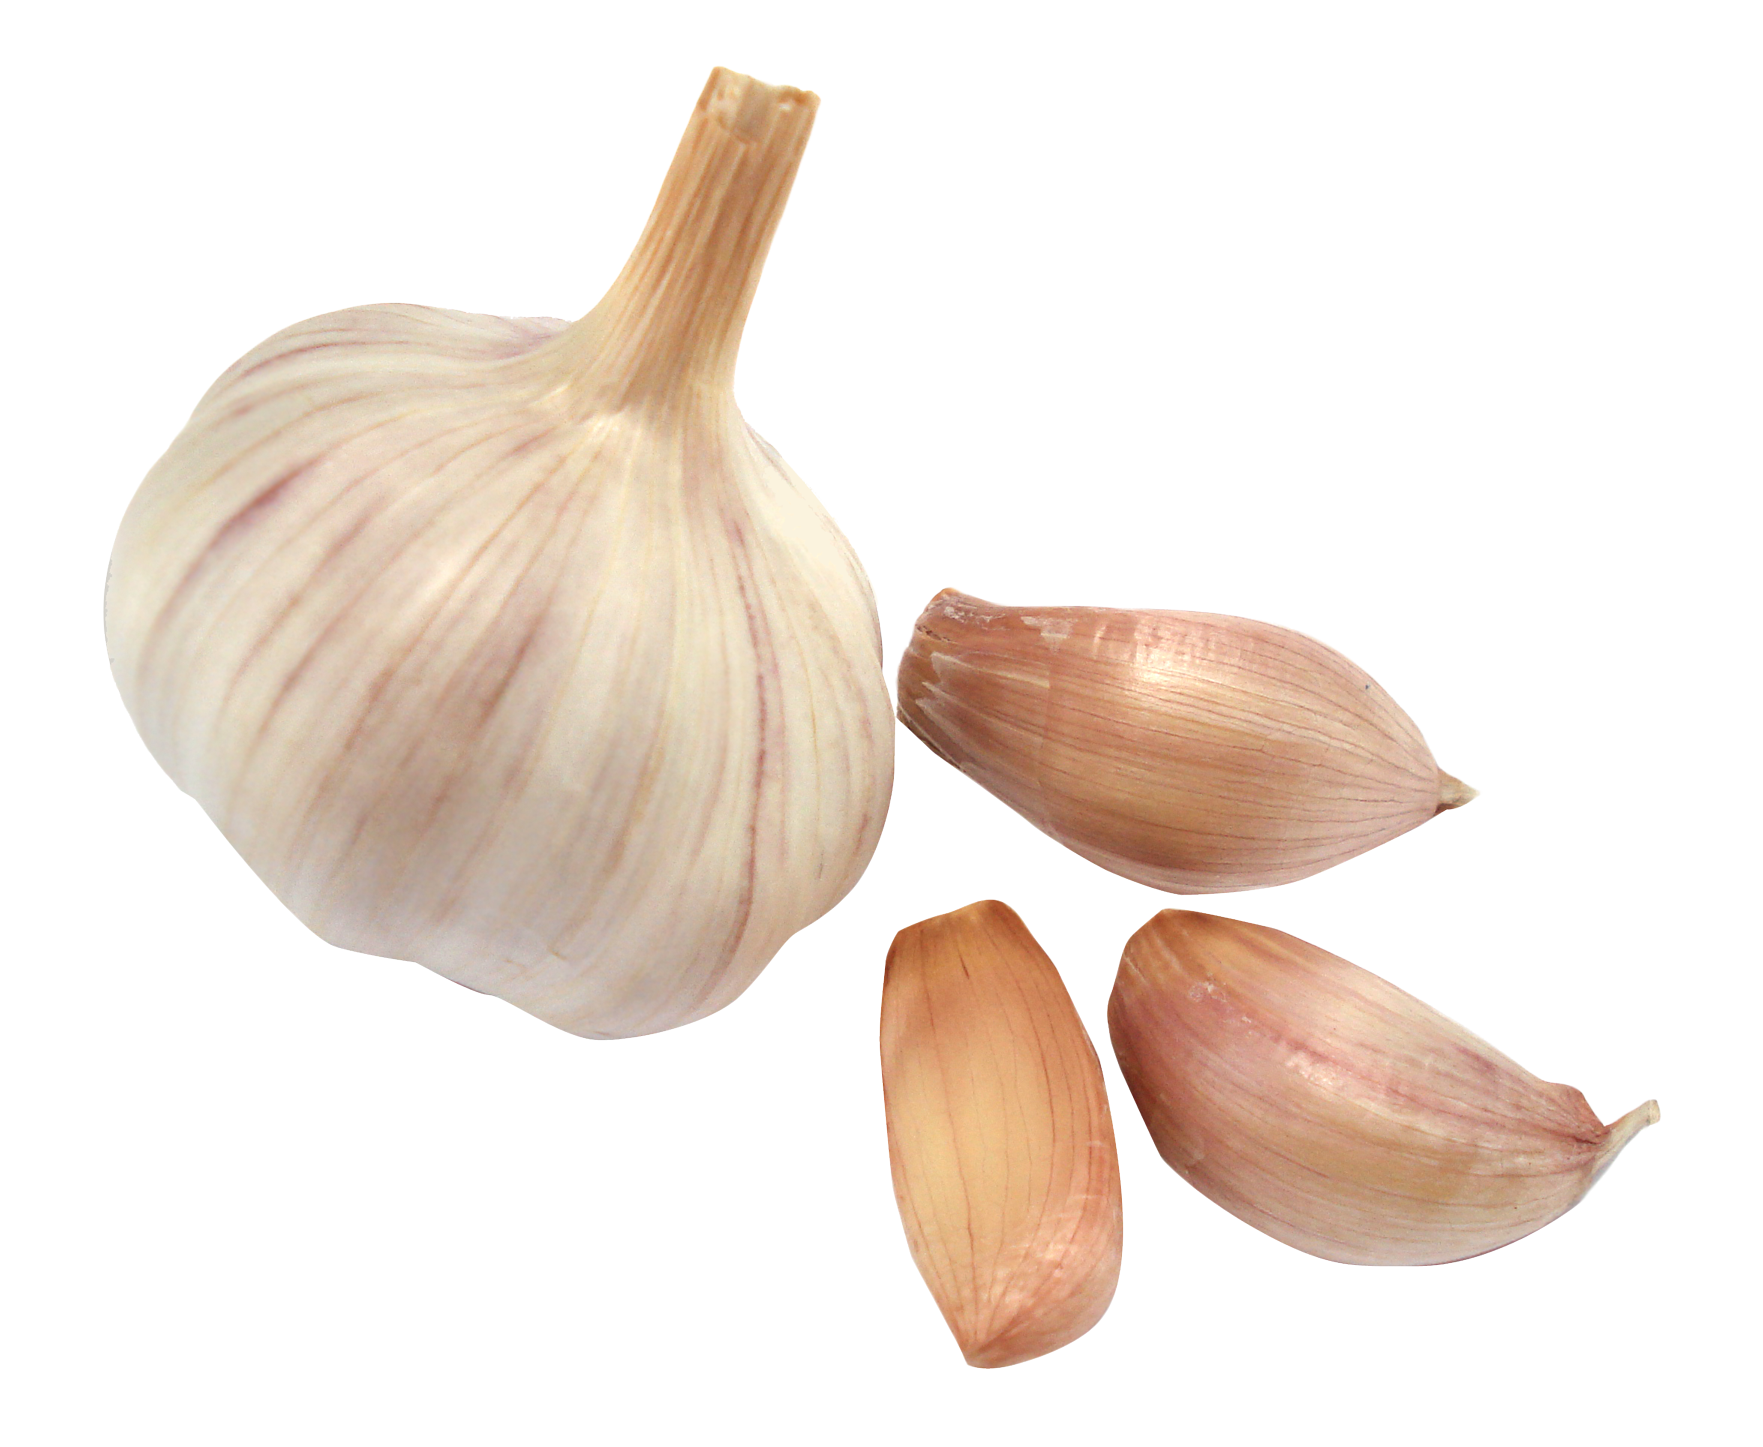 Download Garlic PNG Image for Free